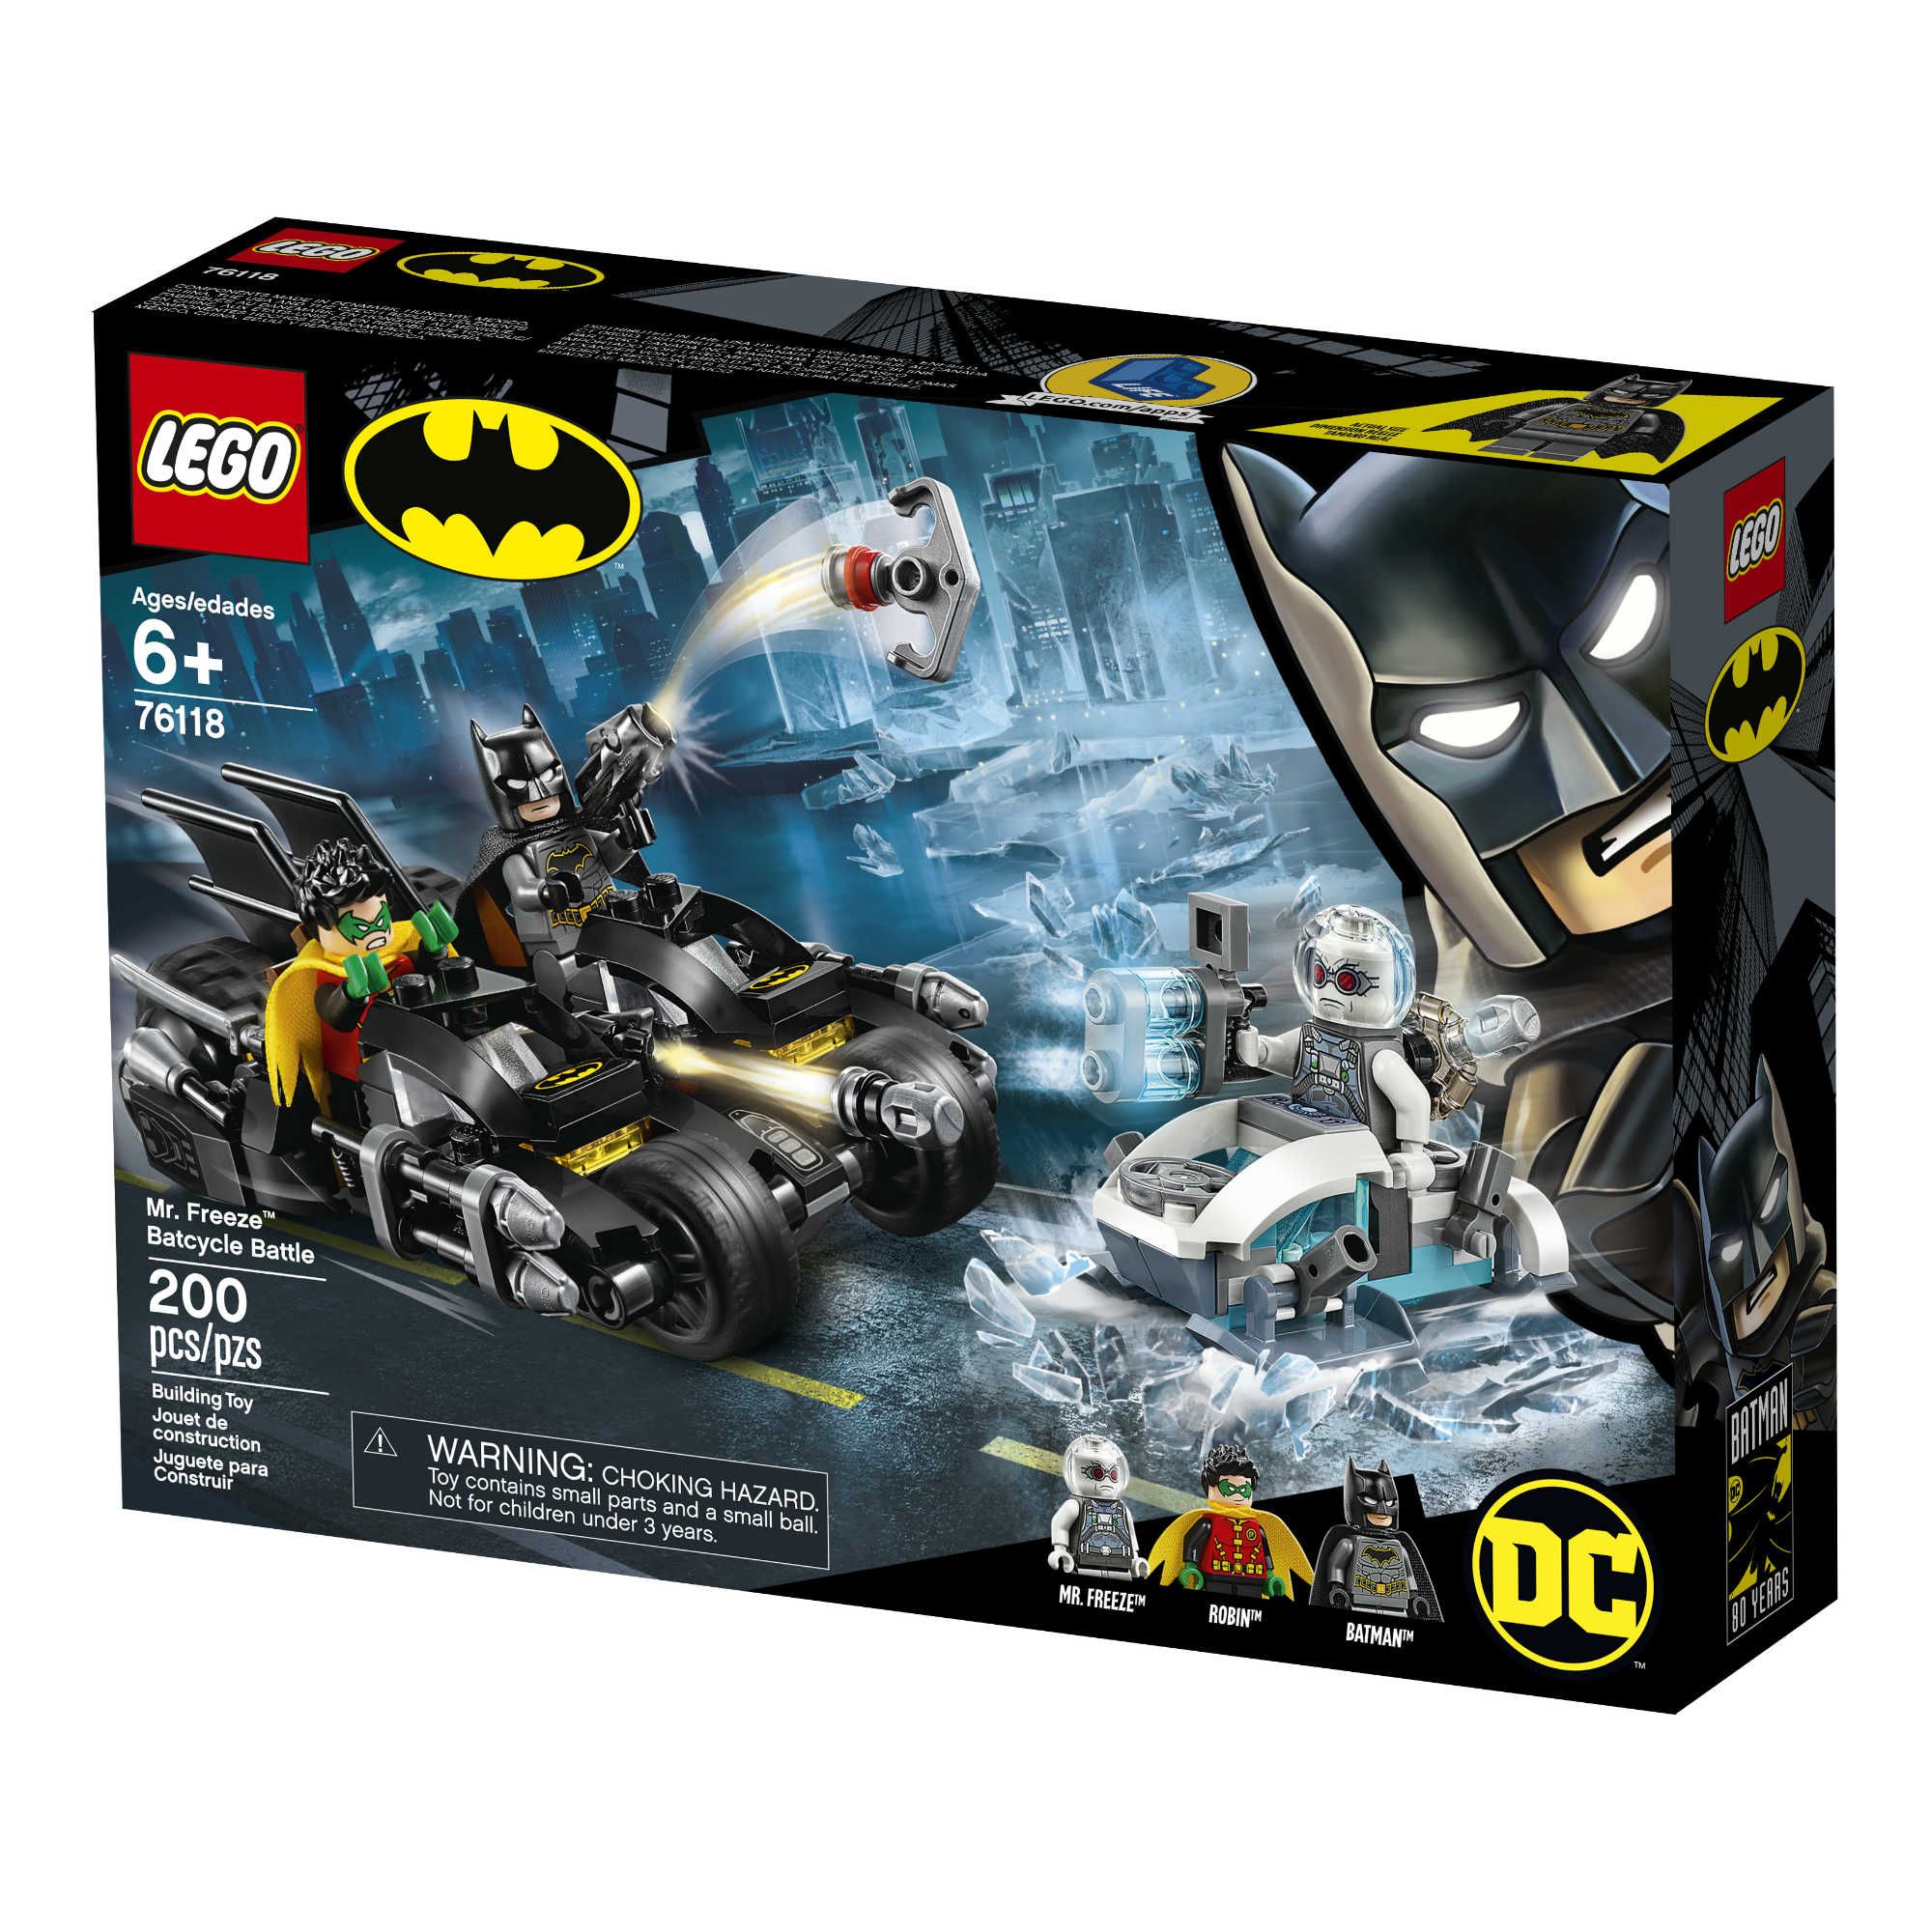 LEGO Batman Sets Unveiled in Celebration of Batmans 80th Anniversary